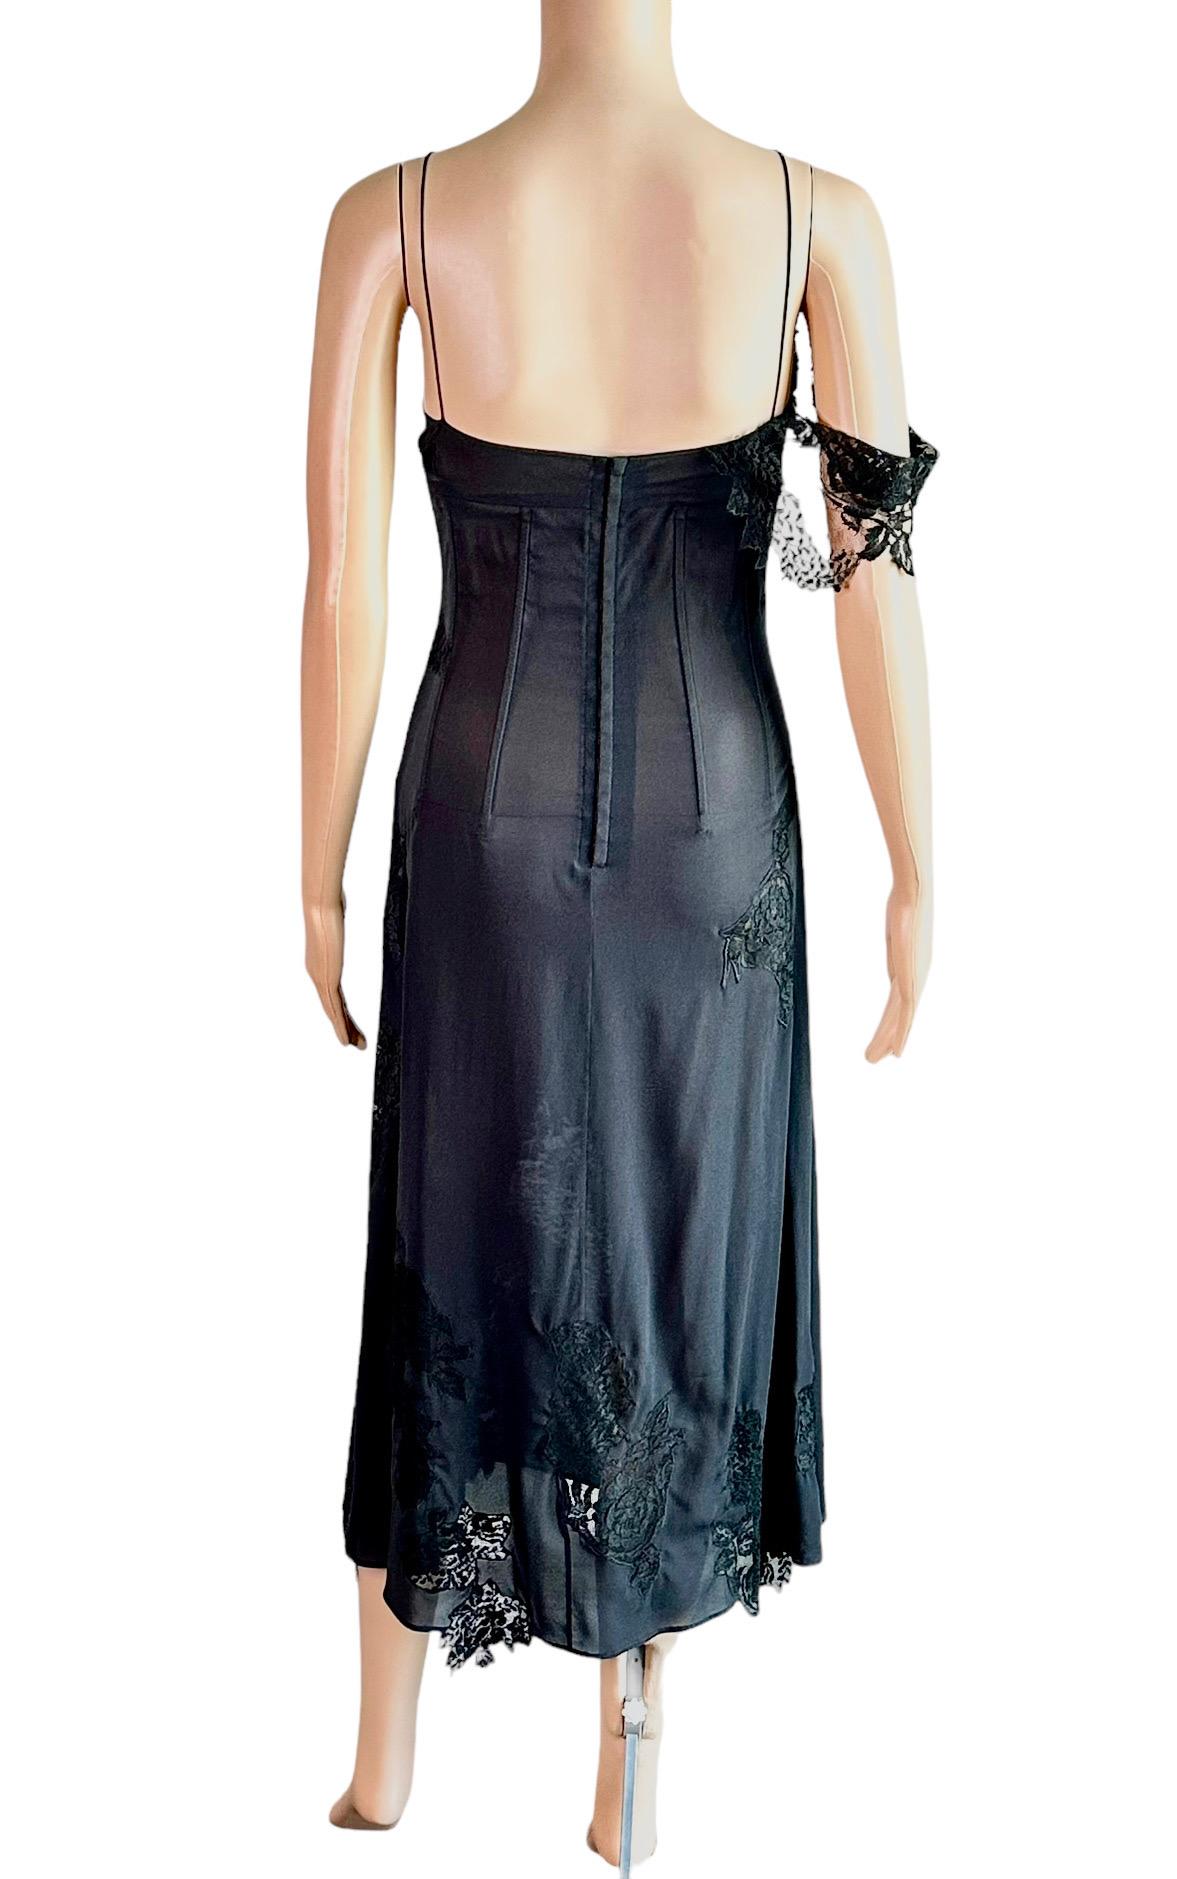 Dolce & Gabbana S/S 2002 Runway Unworn Sheer Lace Corset Black Midi Dress For Sale 3